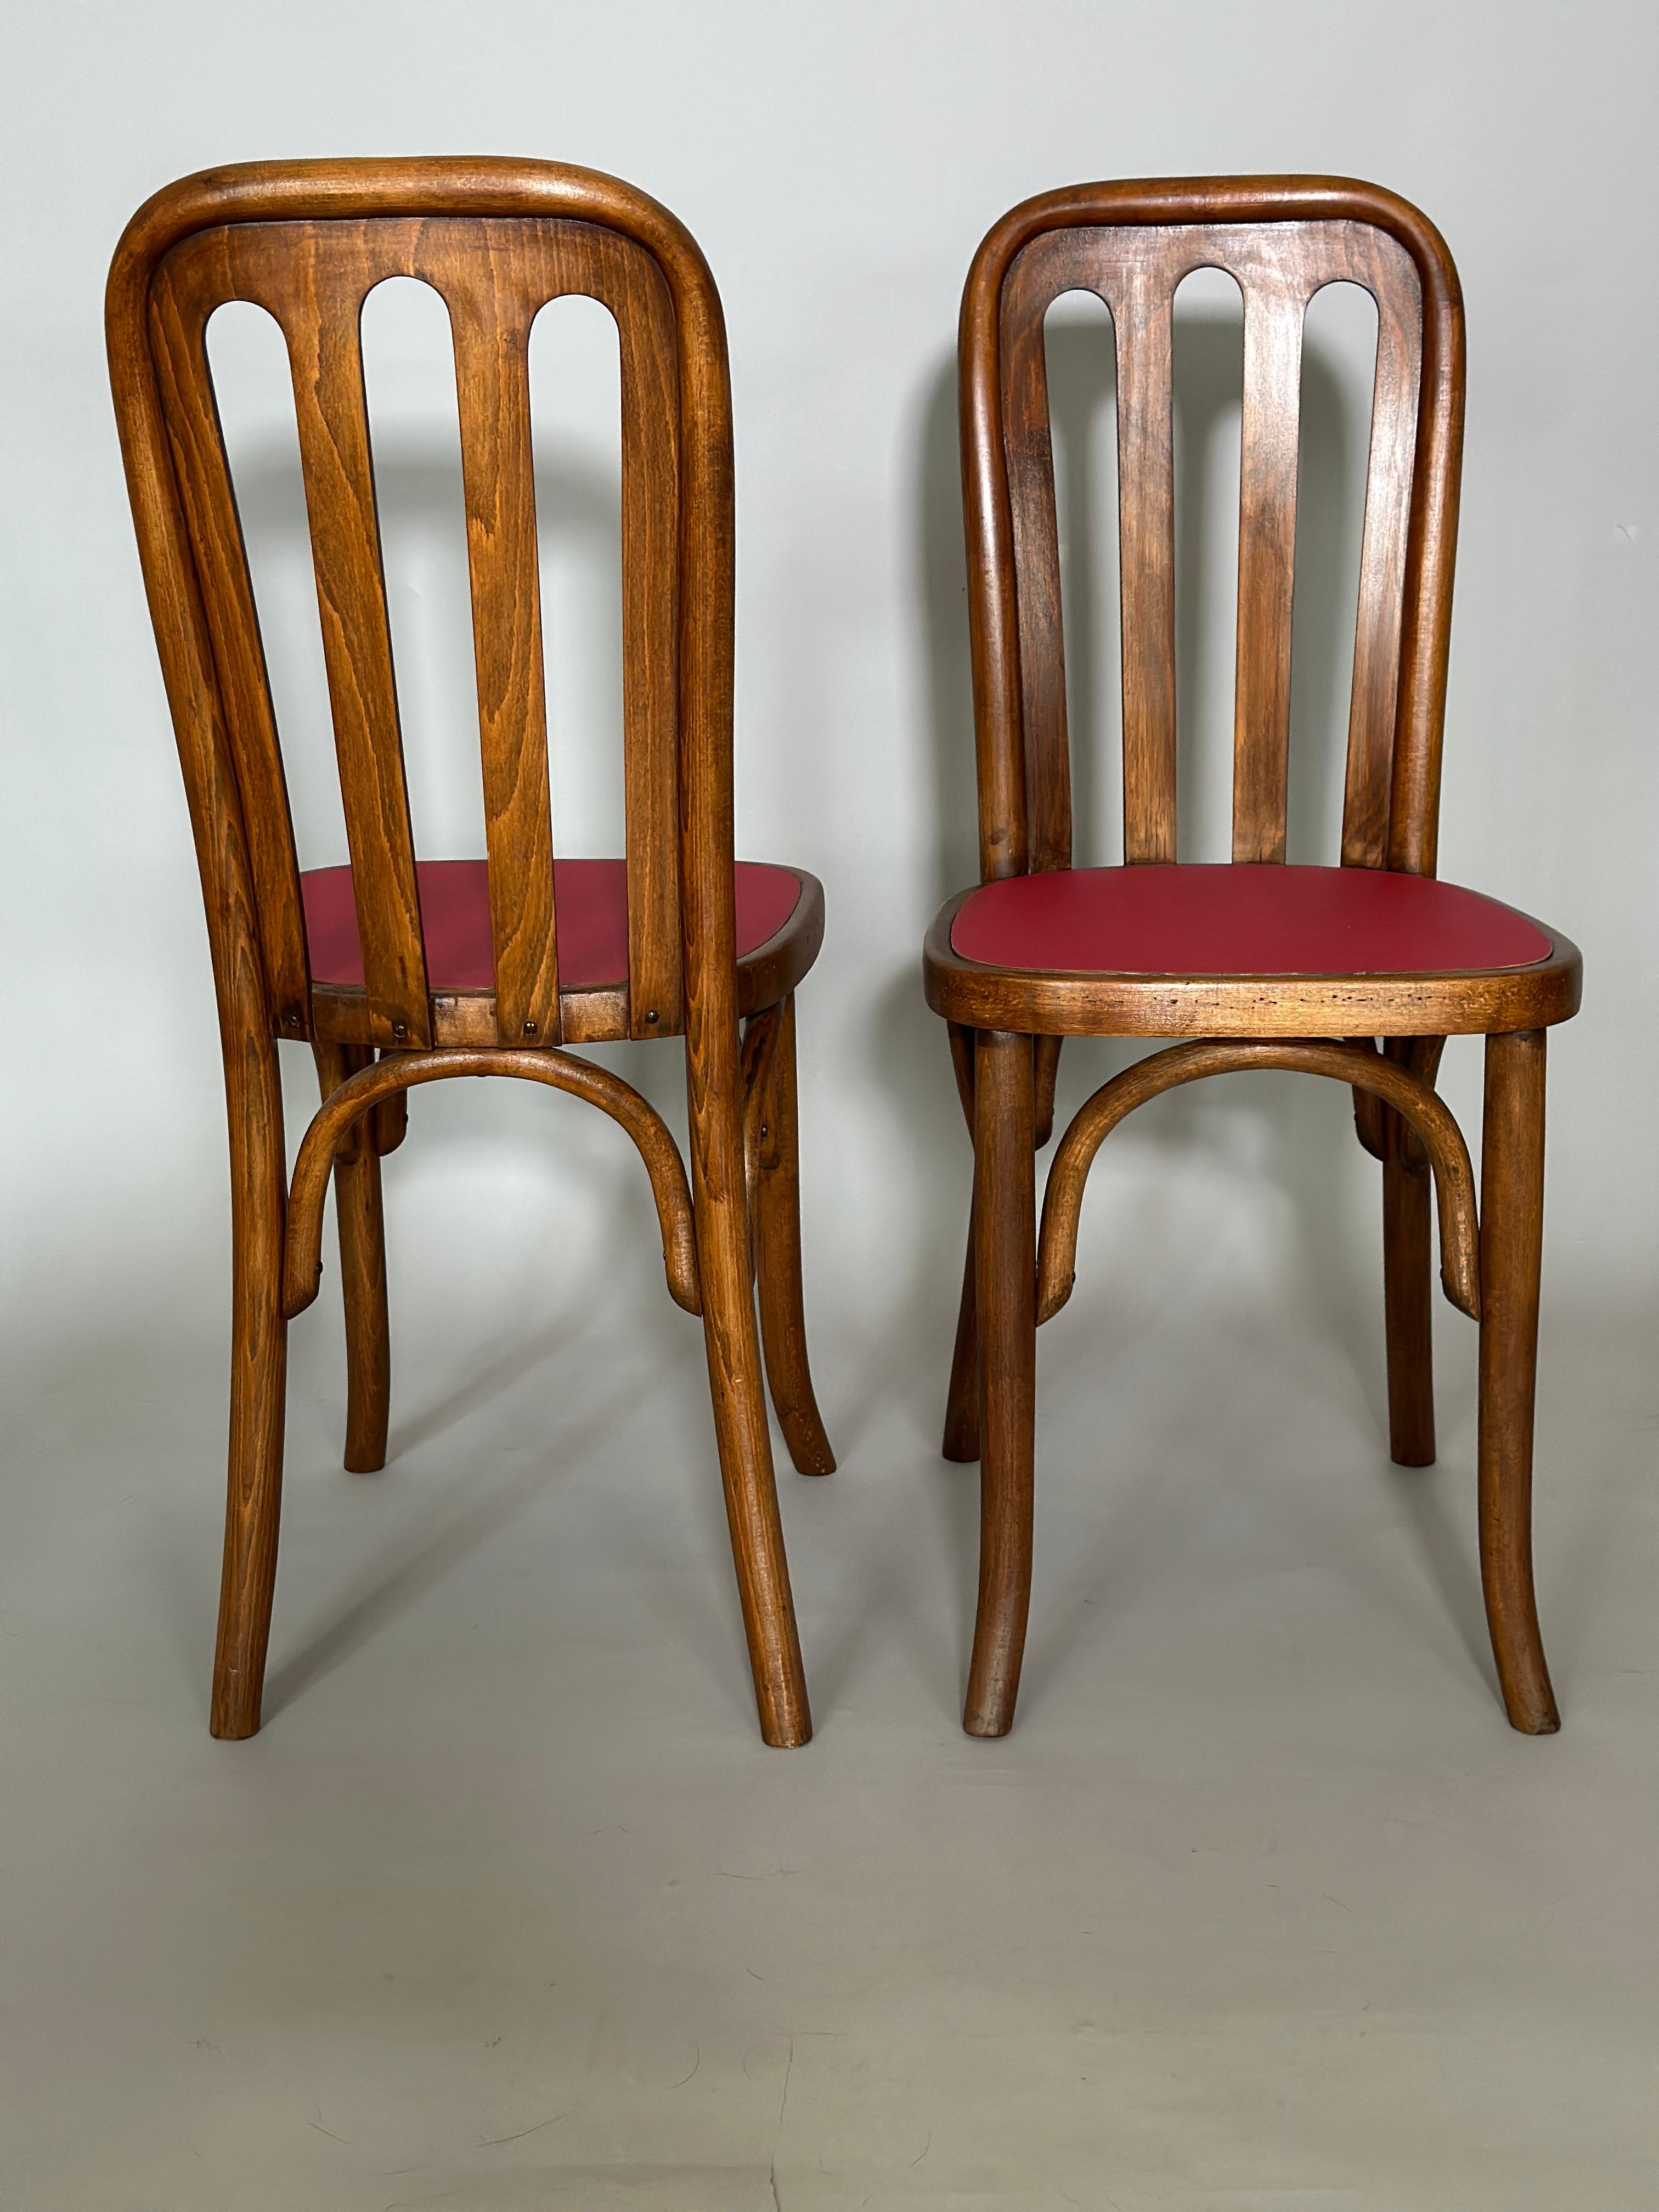 Art Nouveau Josef Hoffmann Chairs, Austria, 1905